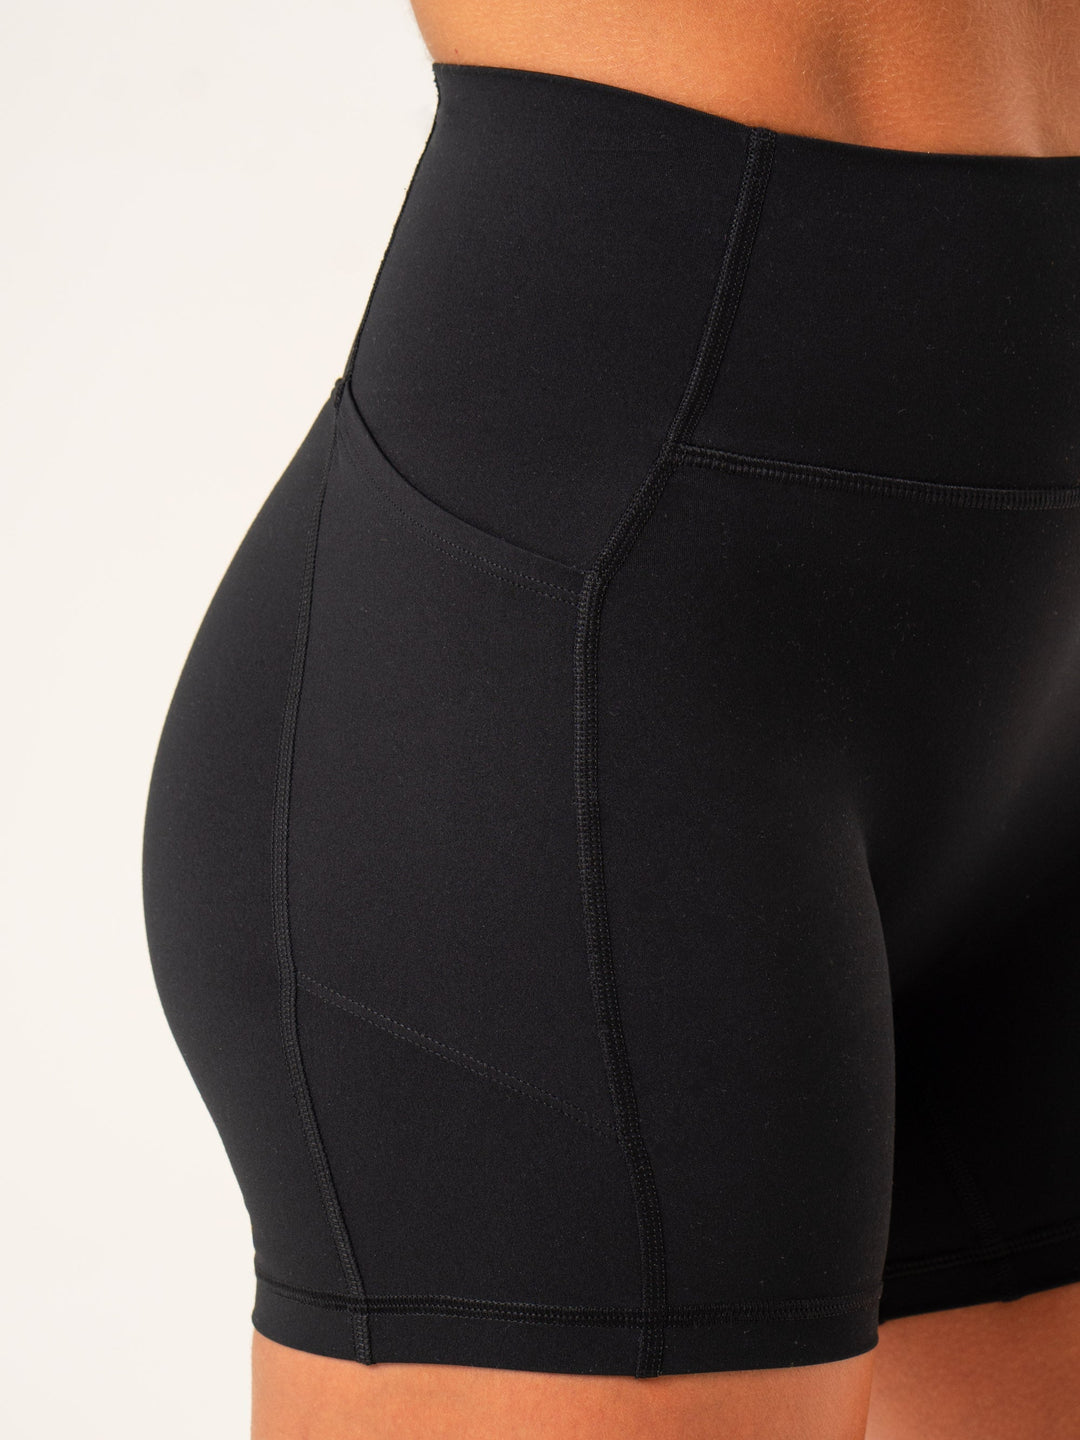 NKD Pocket Shorts - Black Clothing Ryderwear 